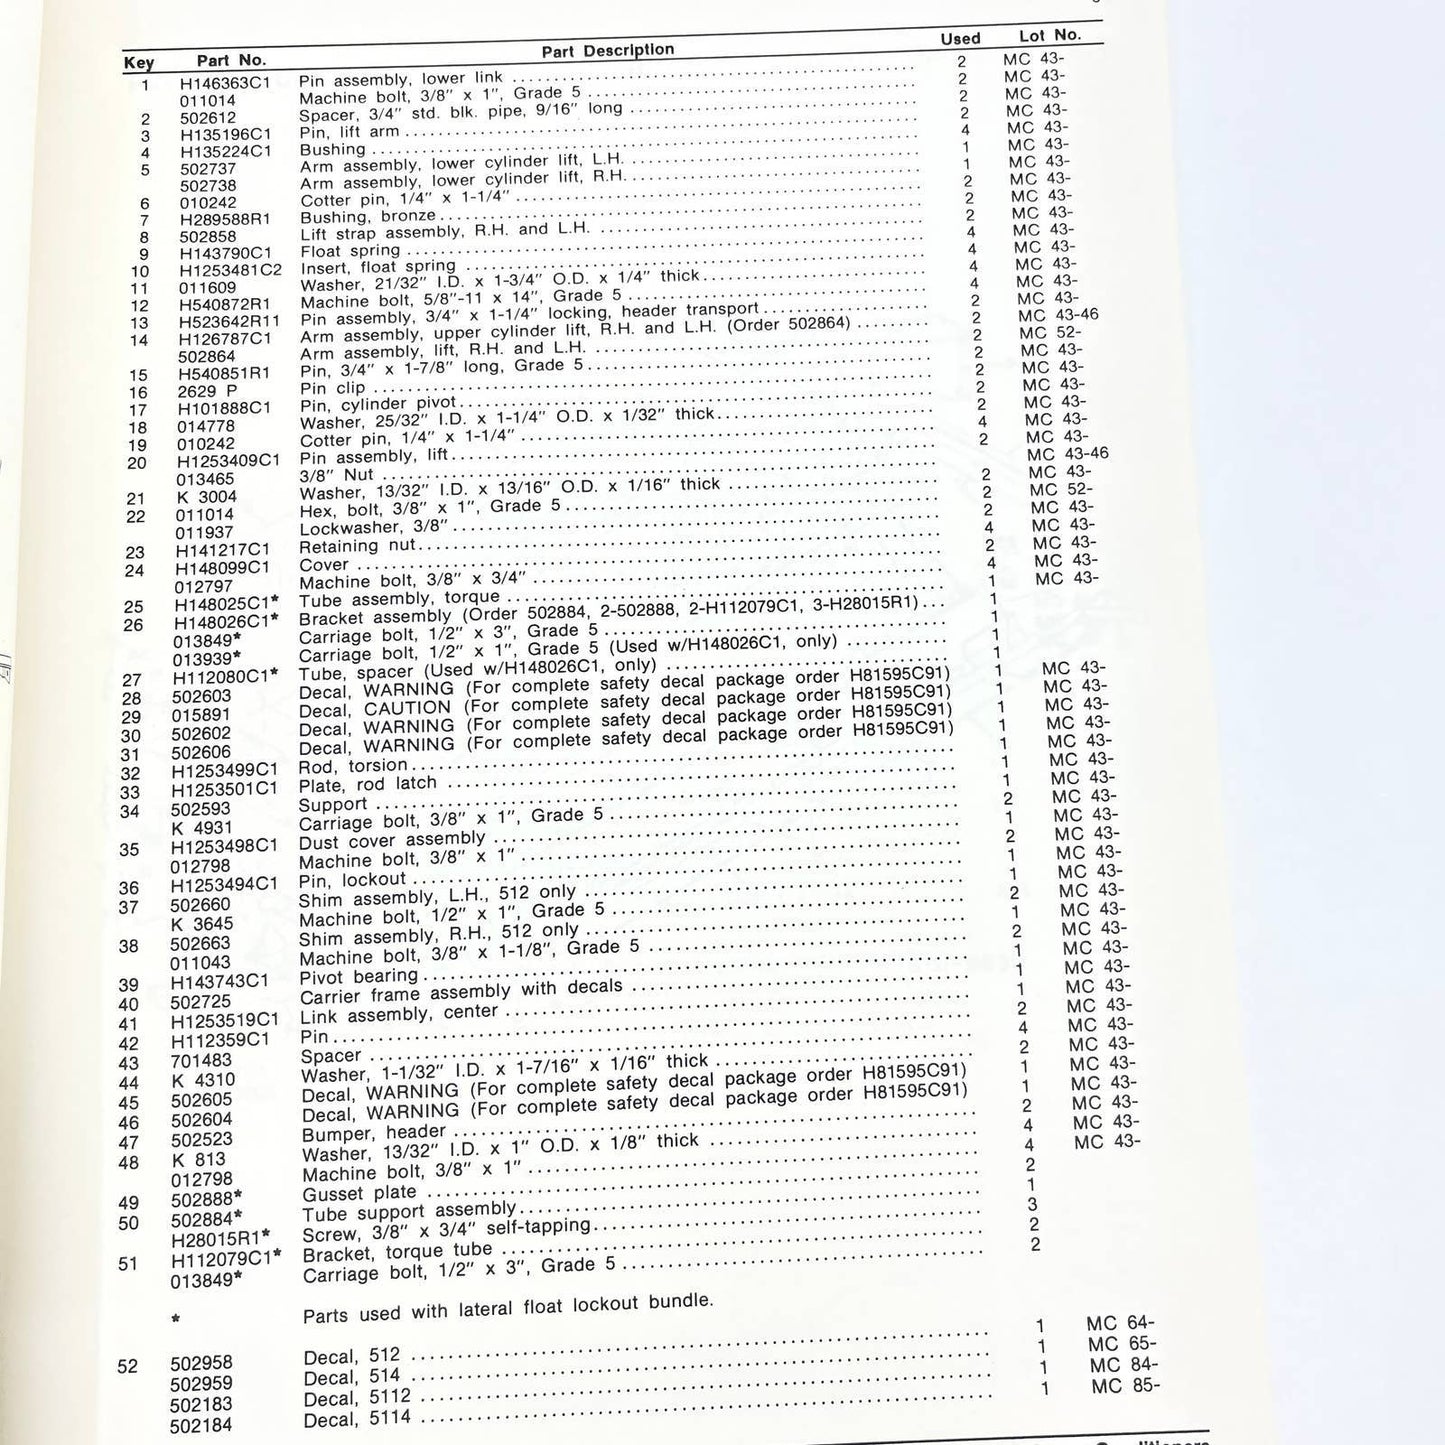 1989 New Idea Parts Catalog MC-29 Mower Conditioners 512 5112 514 5114 TB9